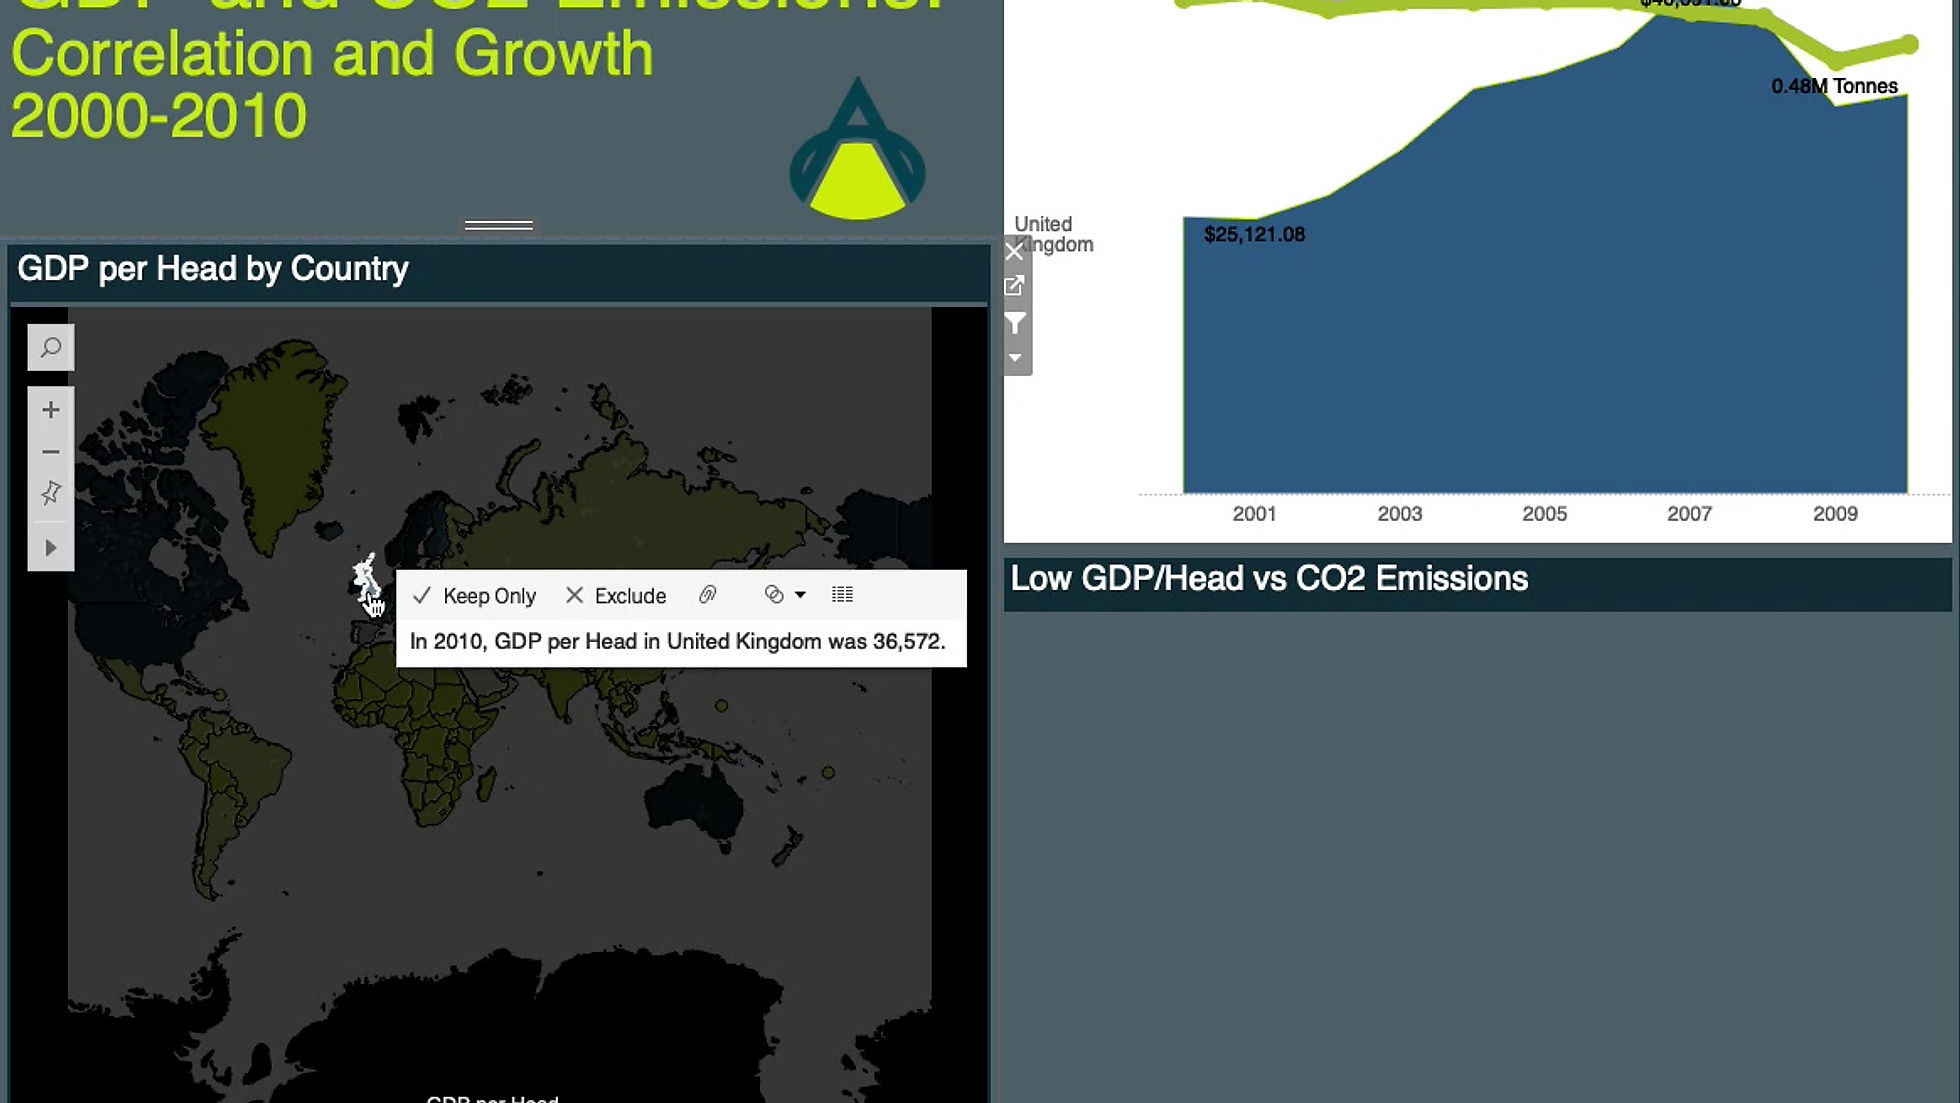 GDP per Head & CO2 Emissions